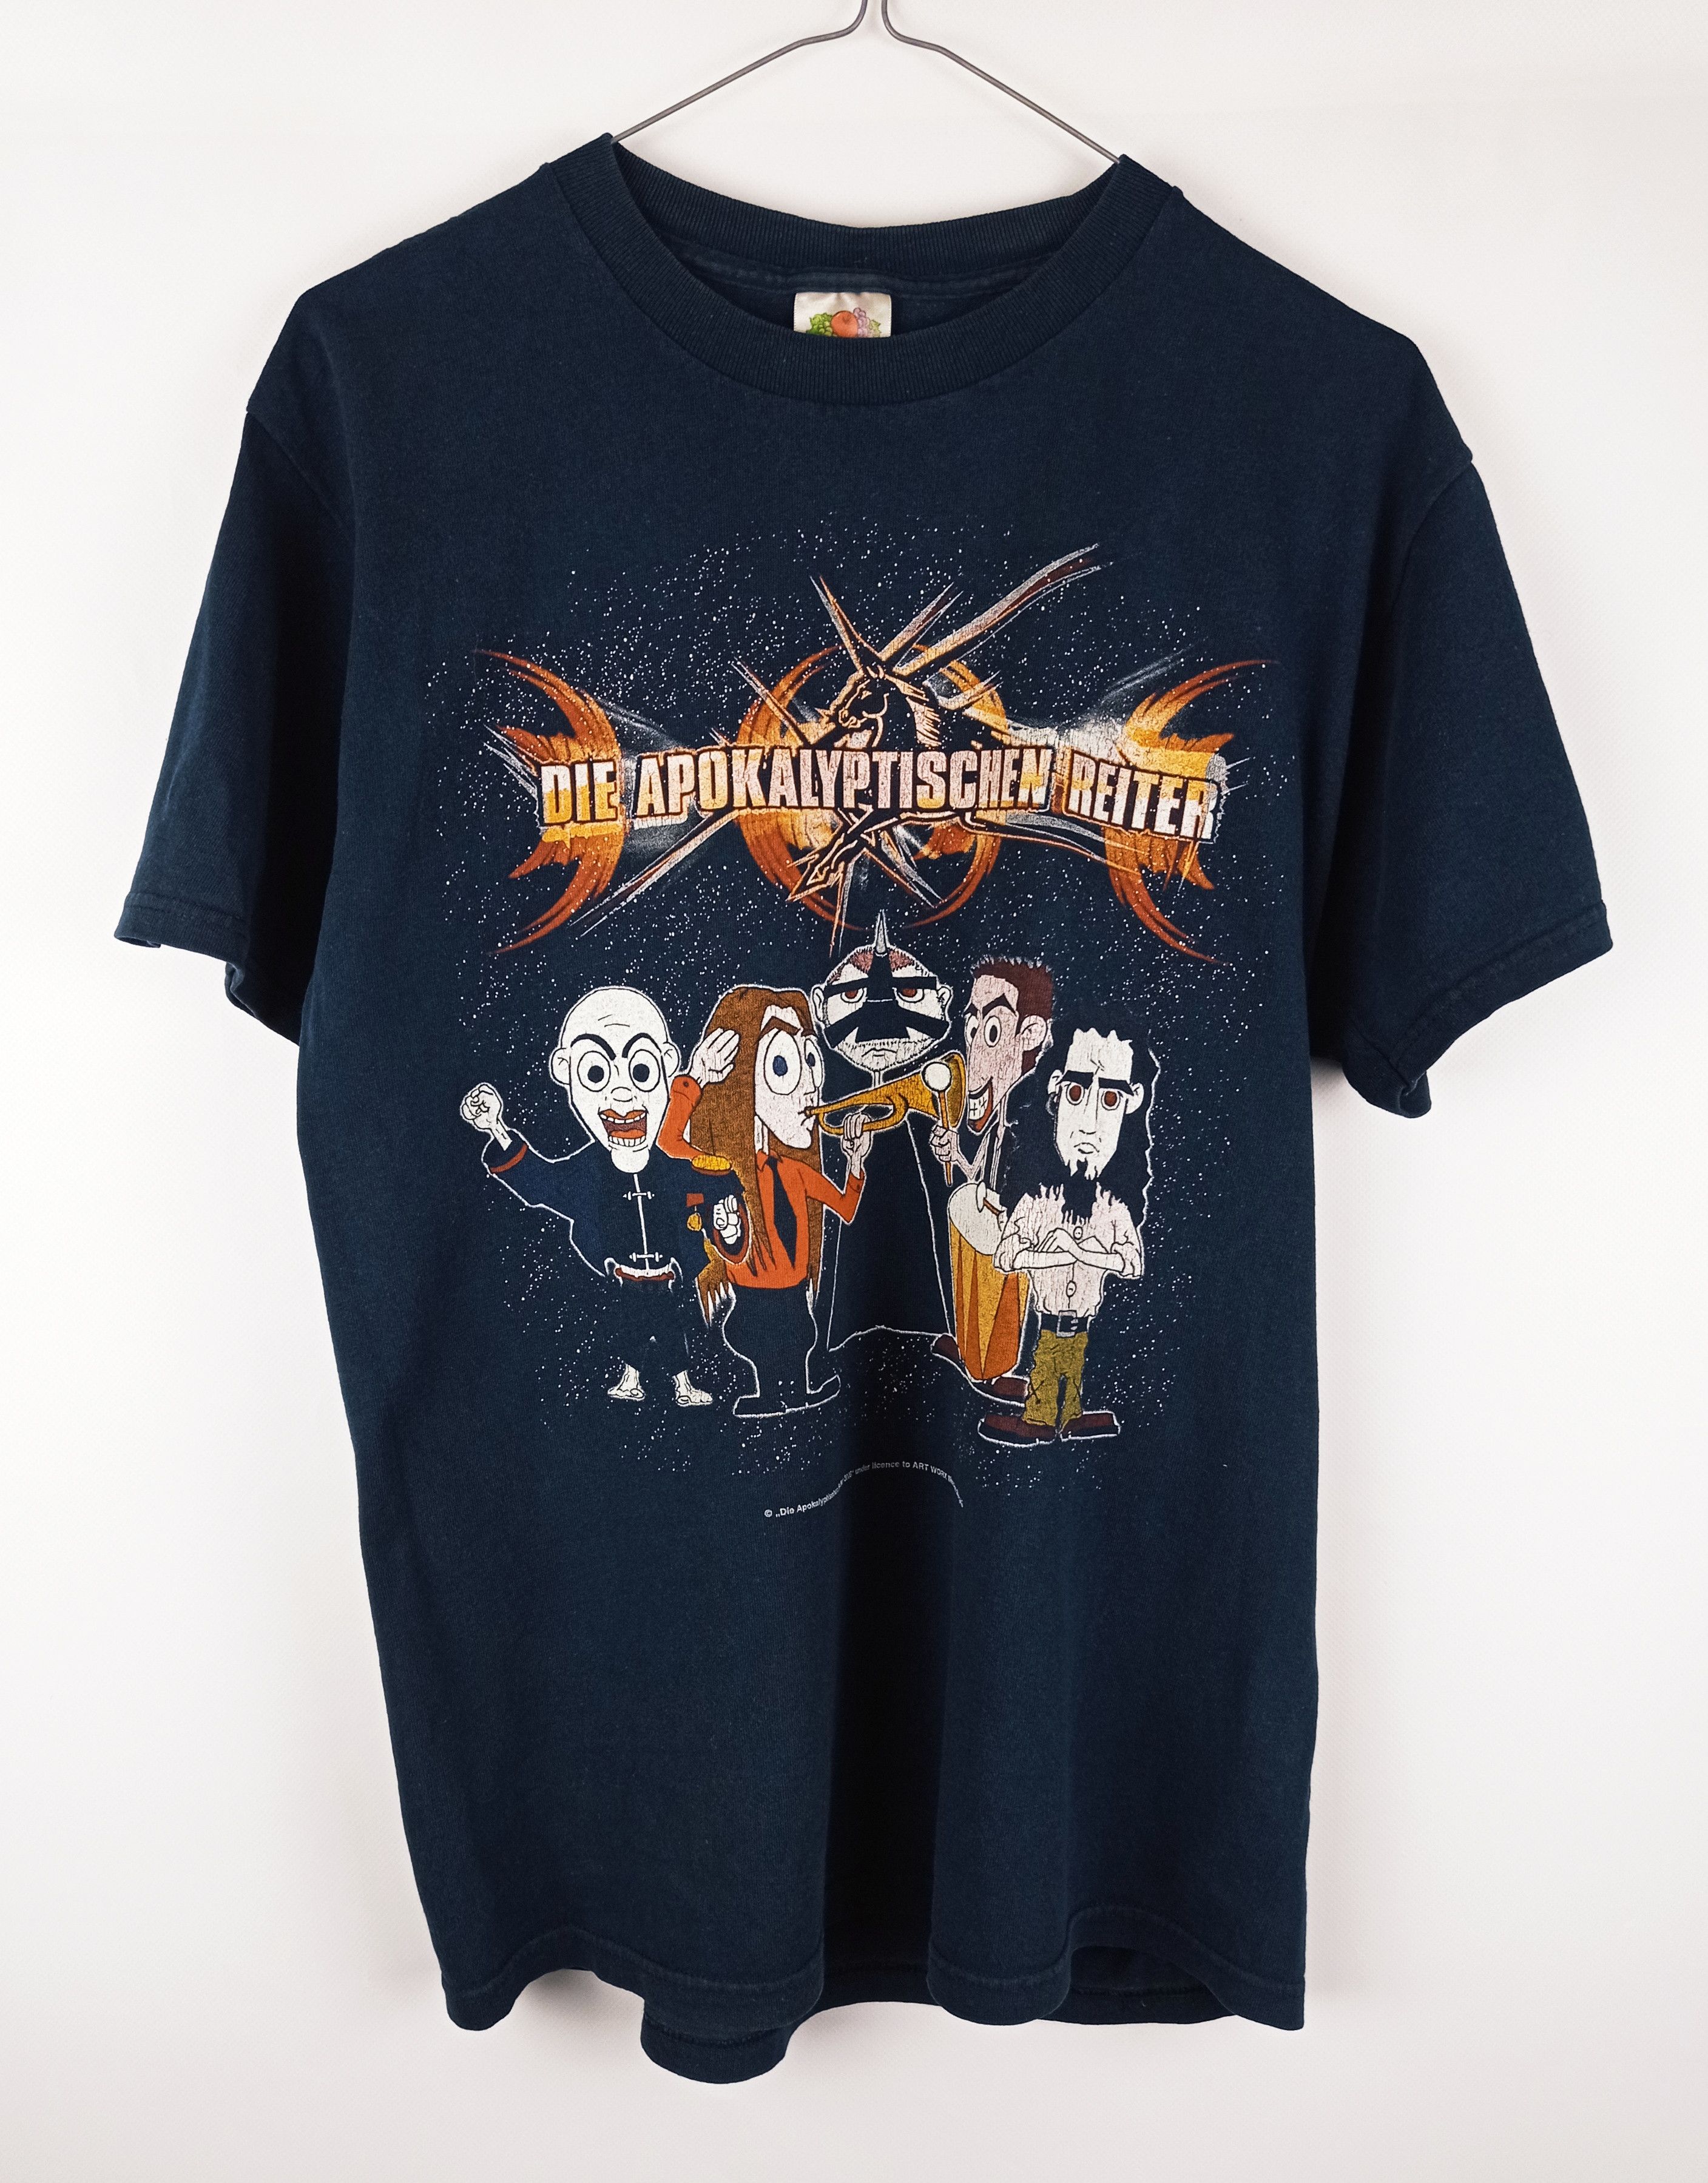 Pre-owned Band Tees X Rock T Shirt Vintage Die Apokalyptischen Reiter Band Death Metal Rock Tee In Black